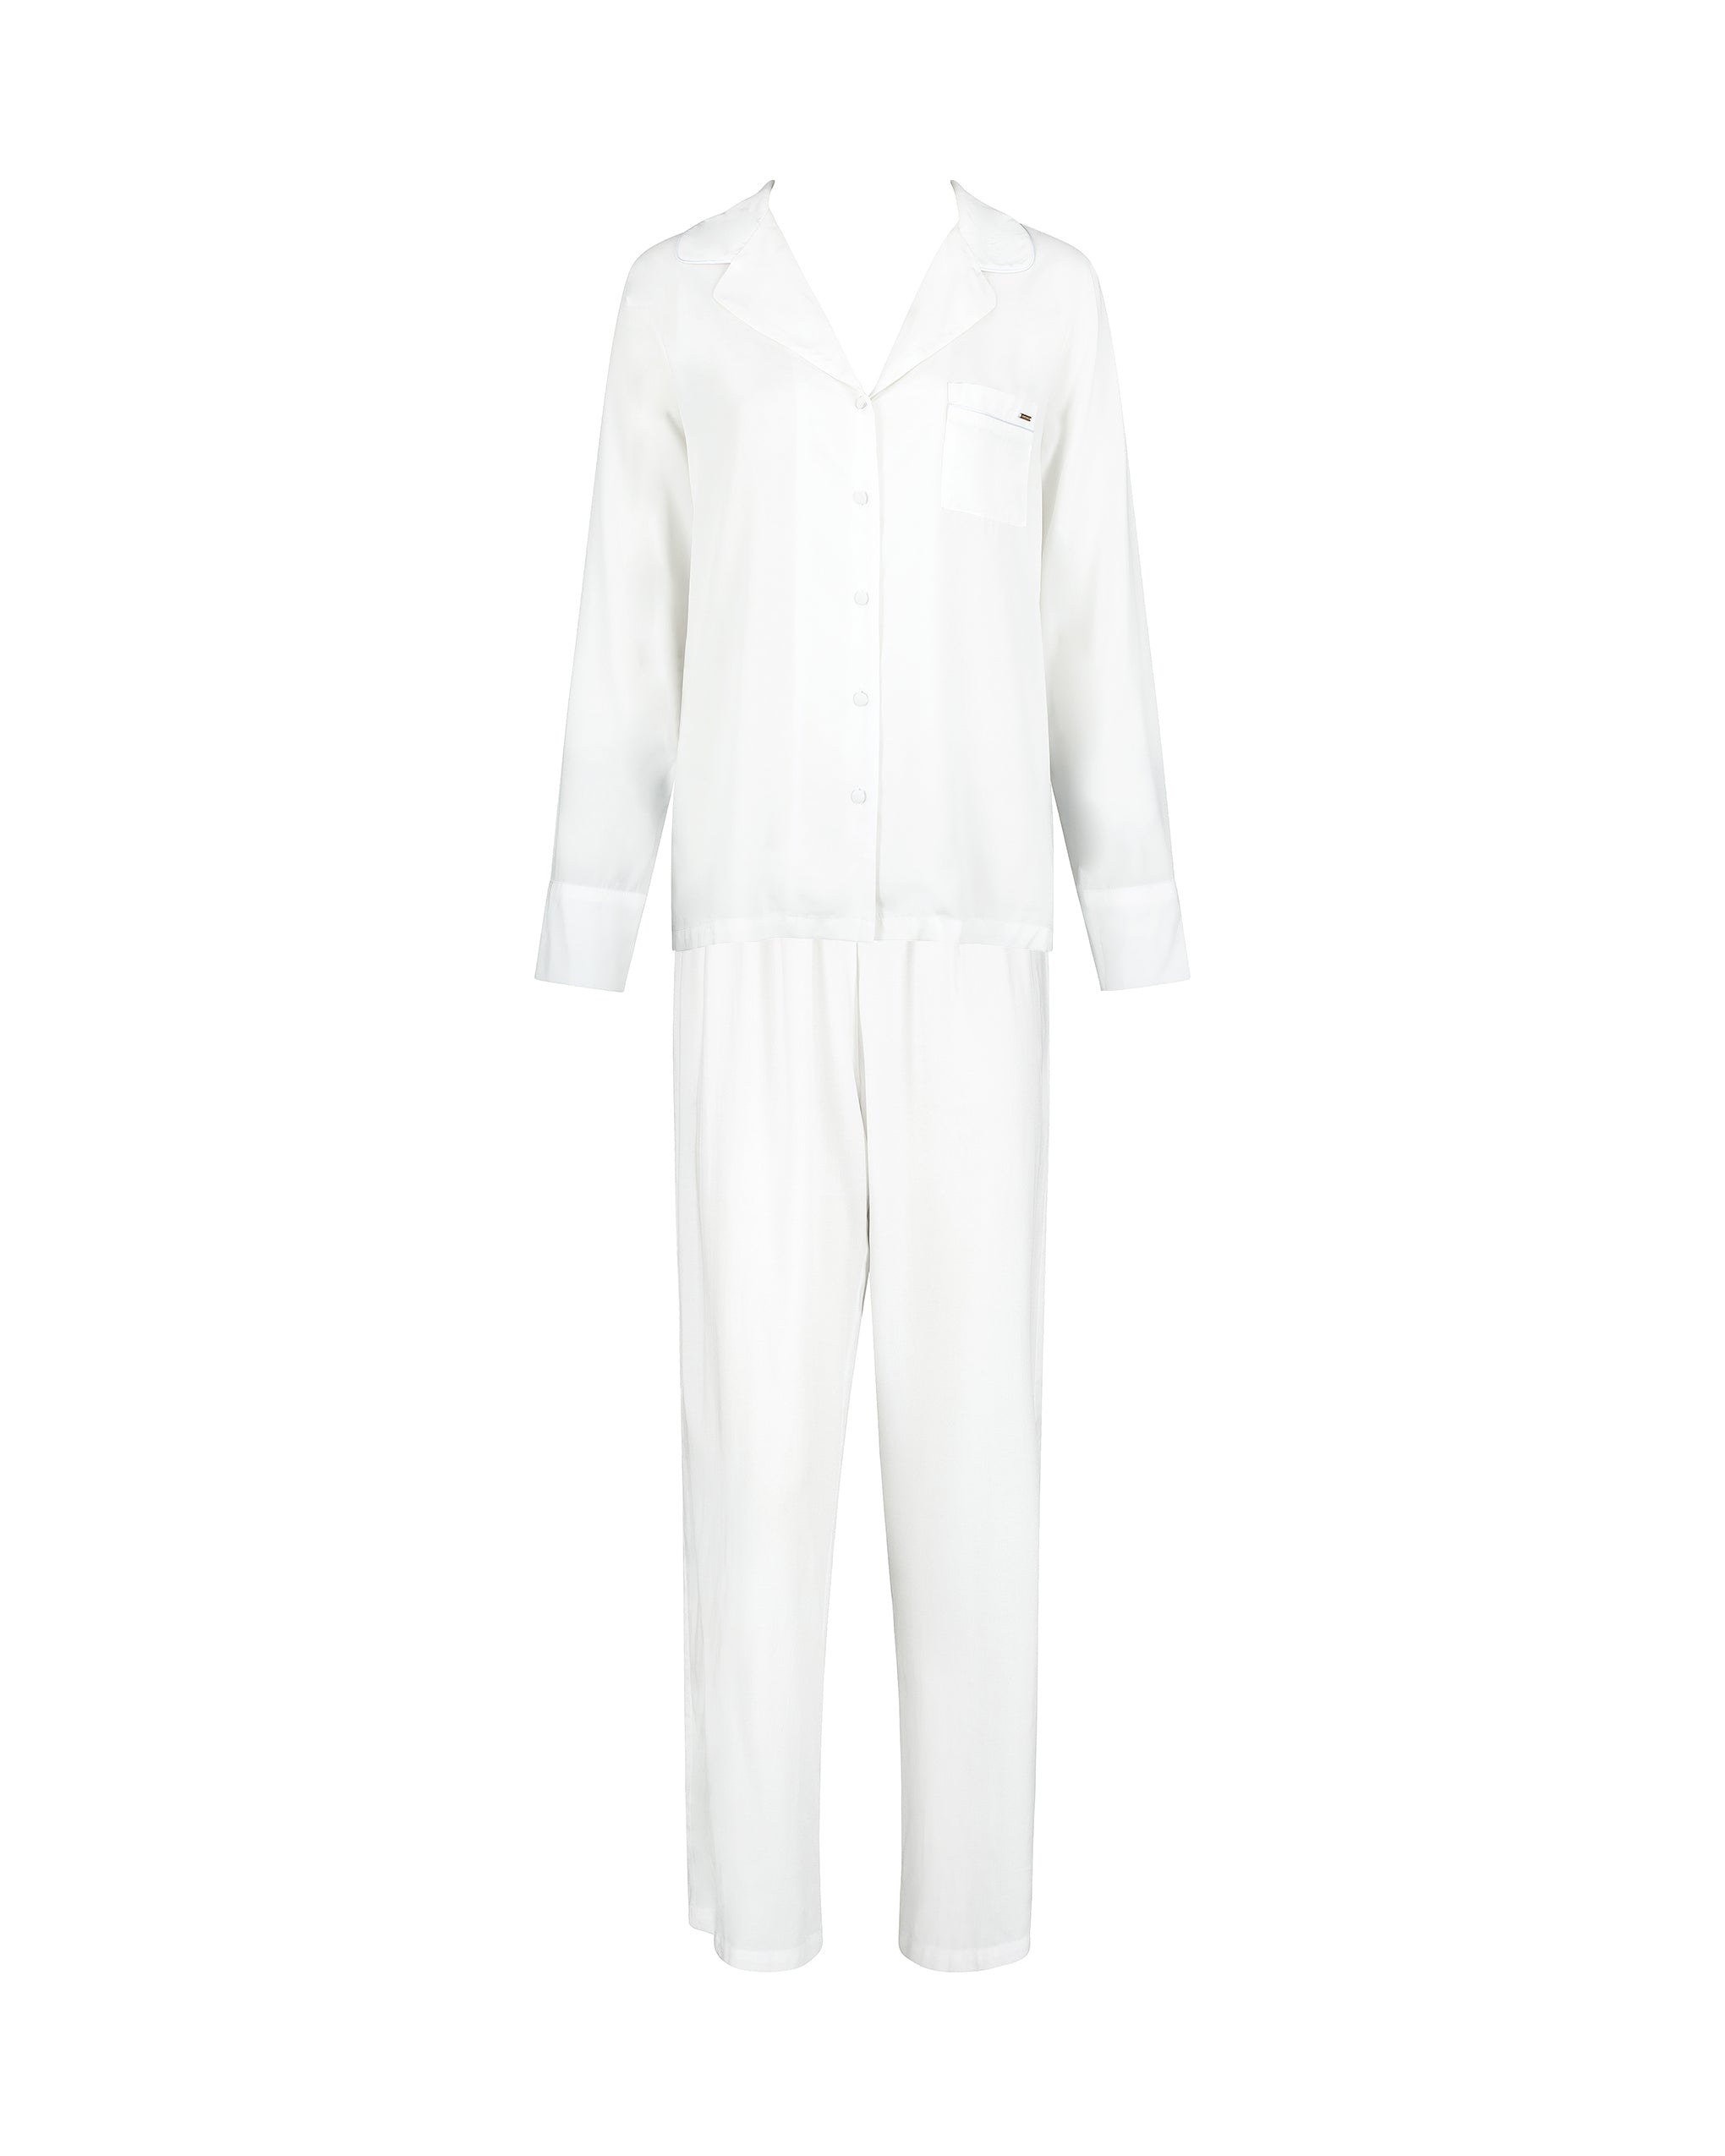 Bluebella Tarcon Eco Viscose Long Pyjama Set White